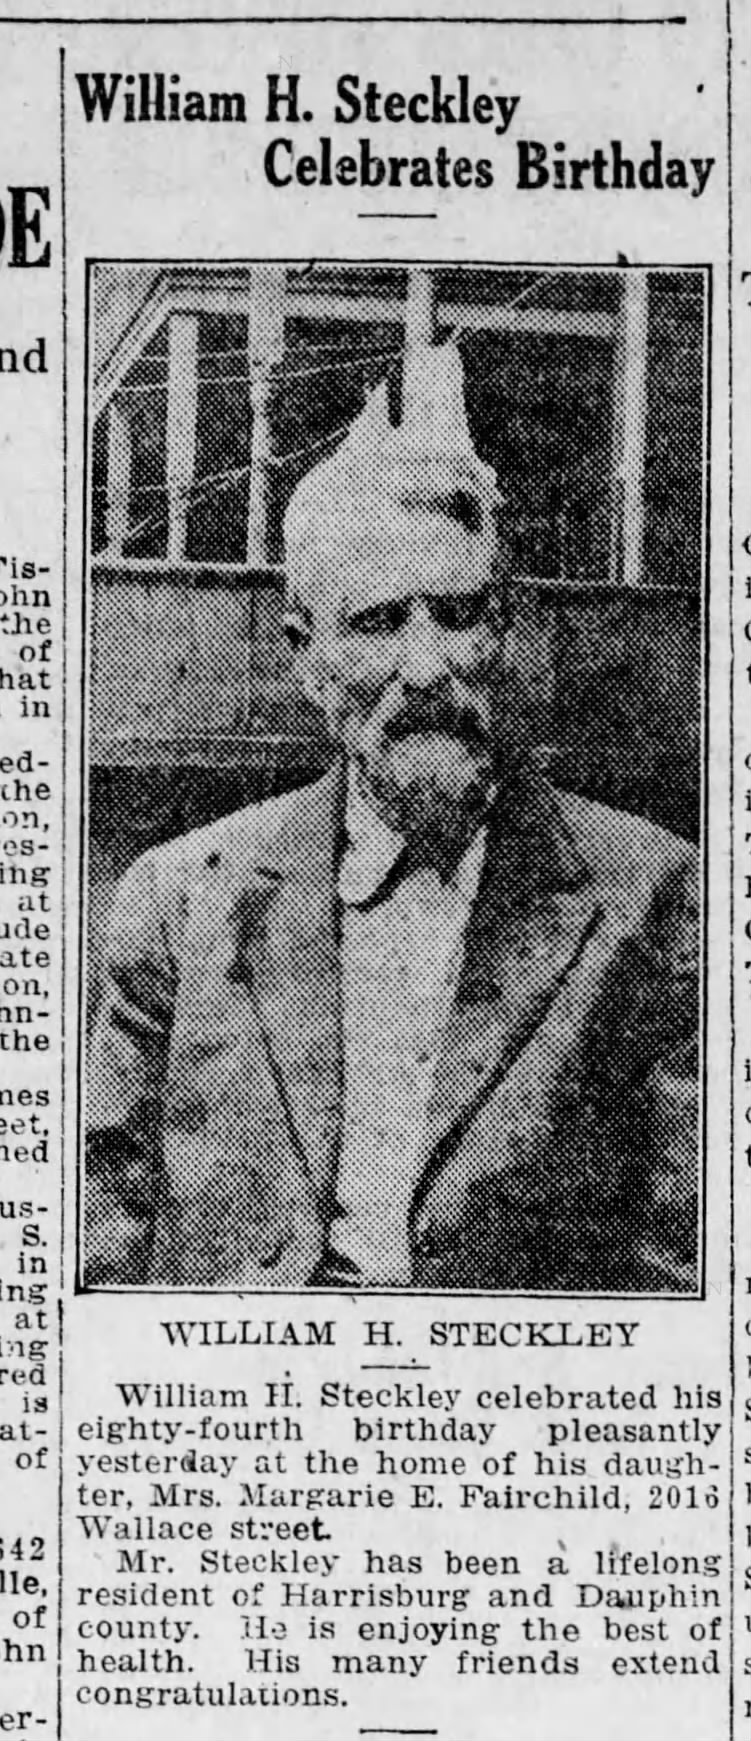 William H. Steckley, 84th birtthday, Auust 1918, Harrisburg, Pennsylvania.